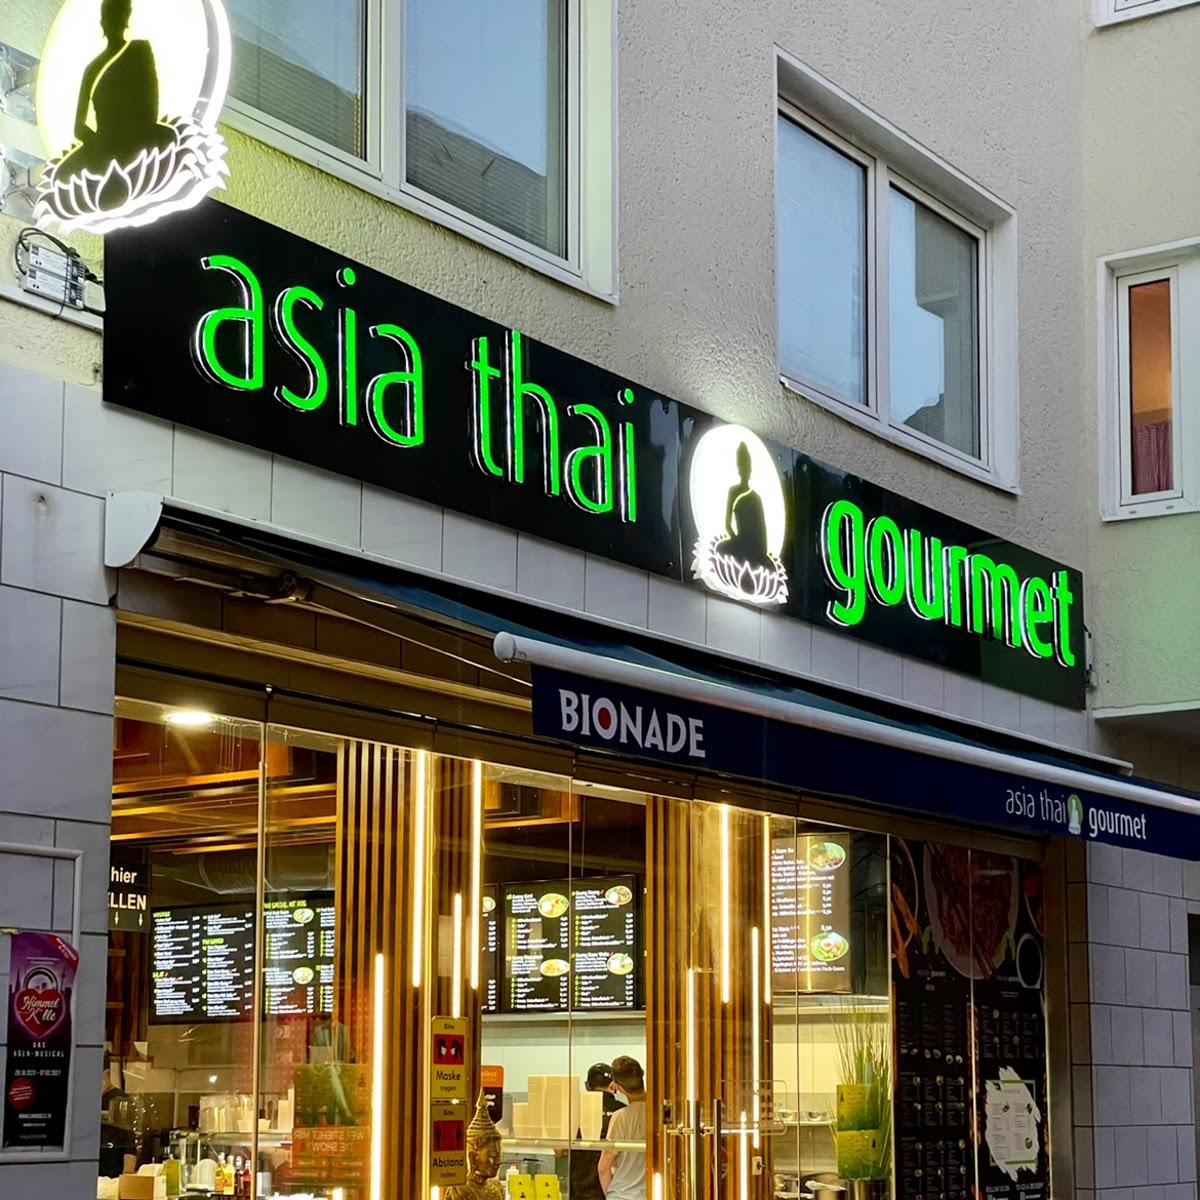 Restaurant "Asia Thai Gourmet" in Köln